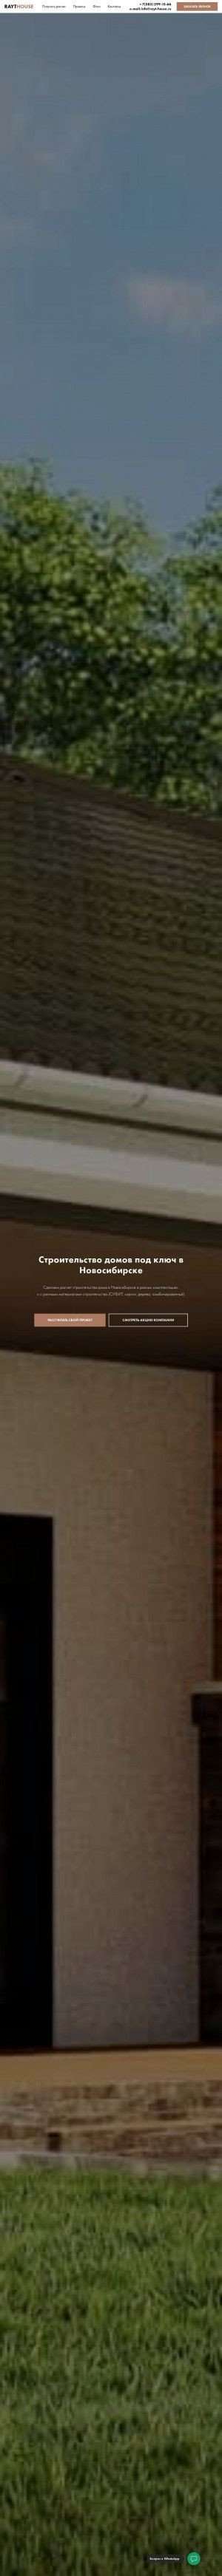 Предпросмотр для rayt-house.ru — Слд-строй